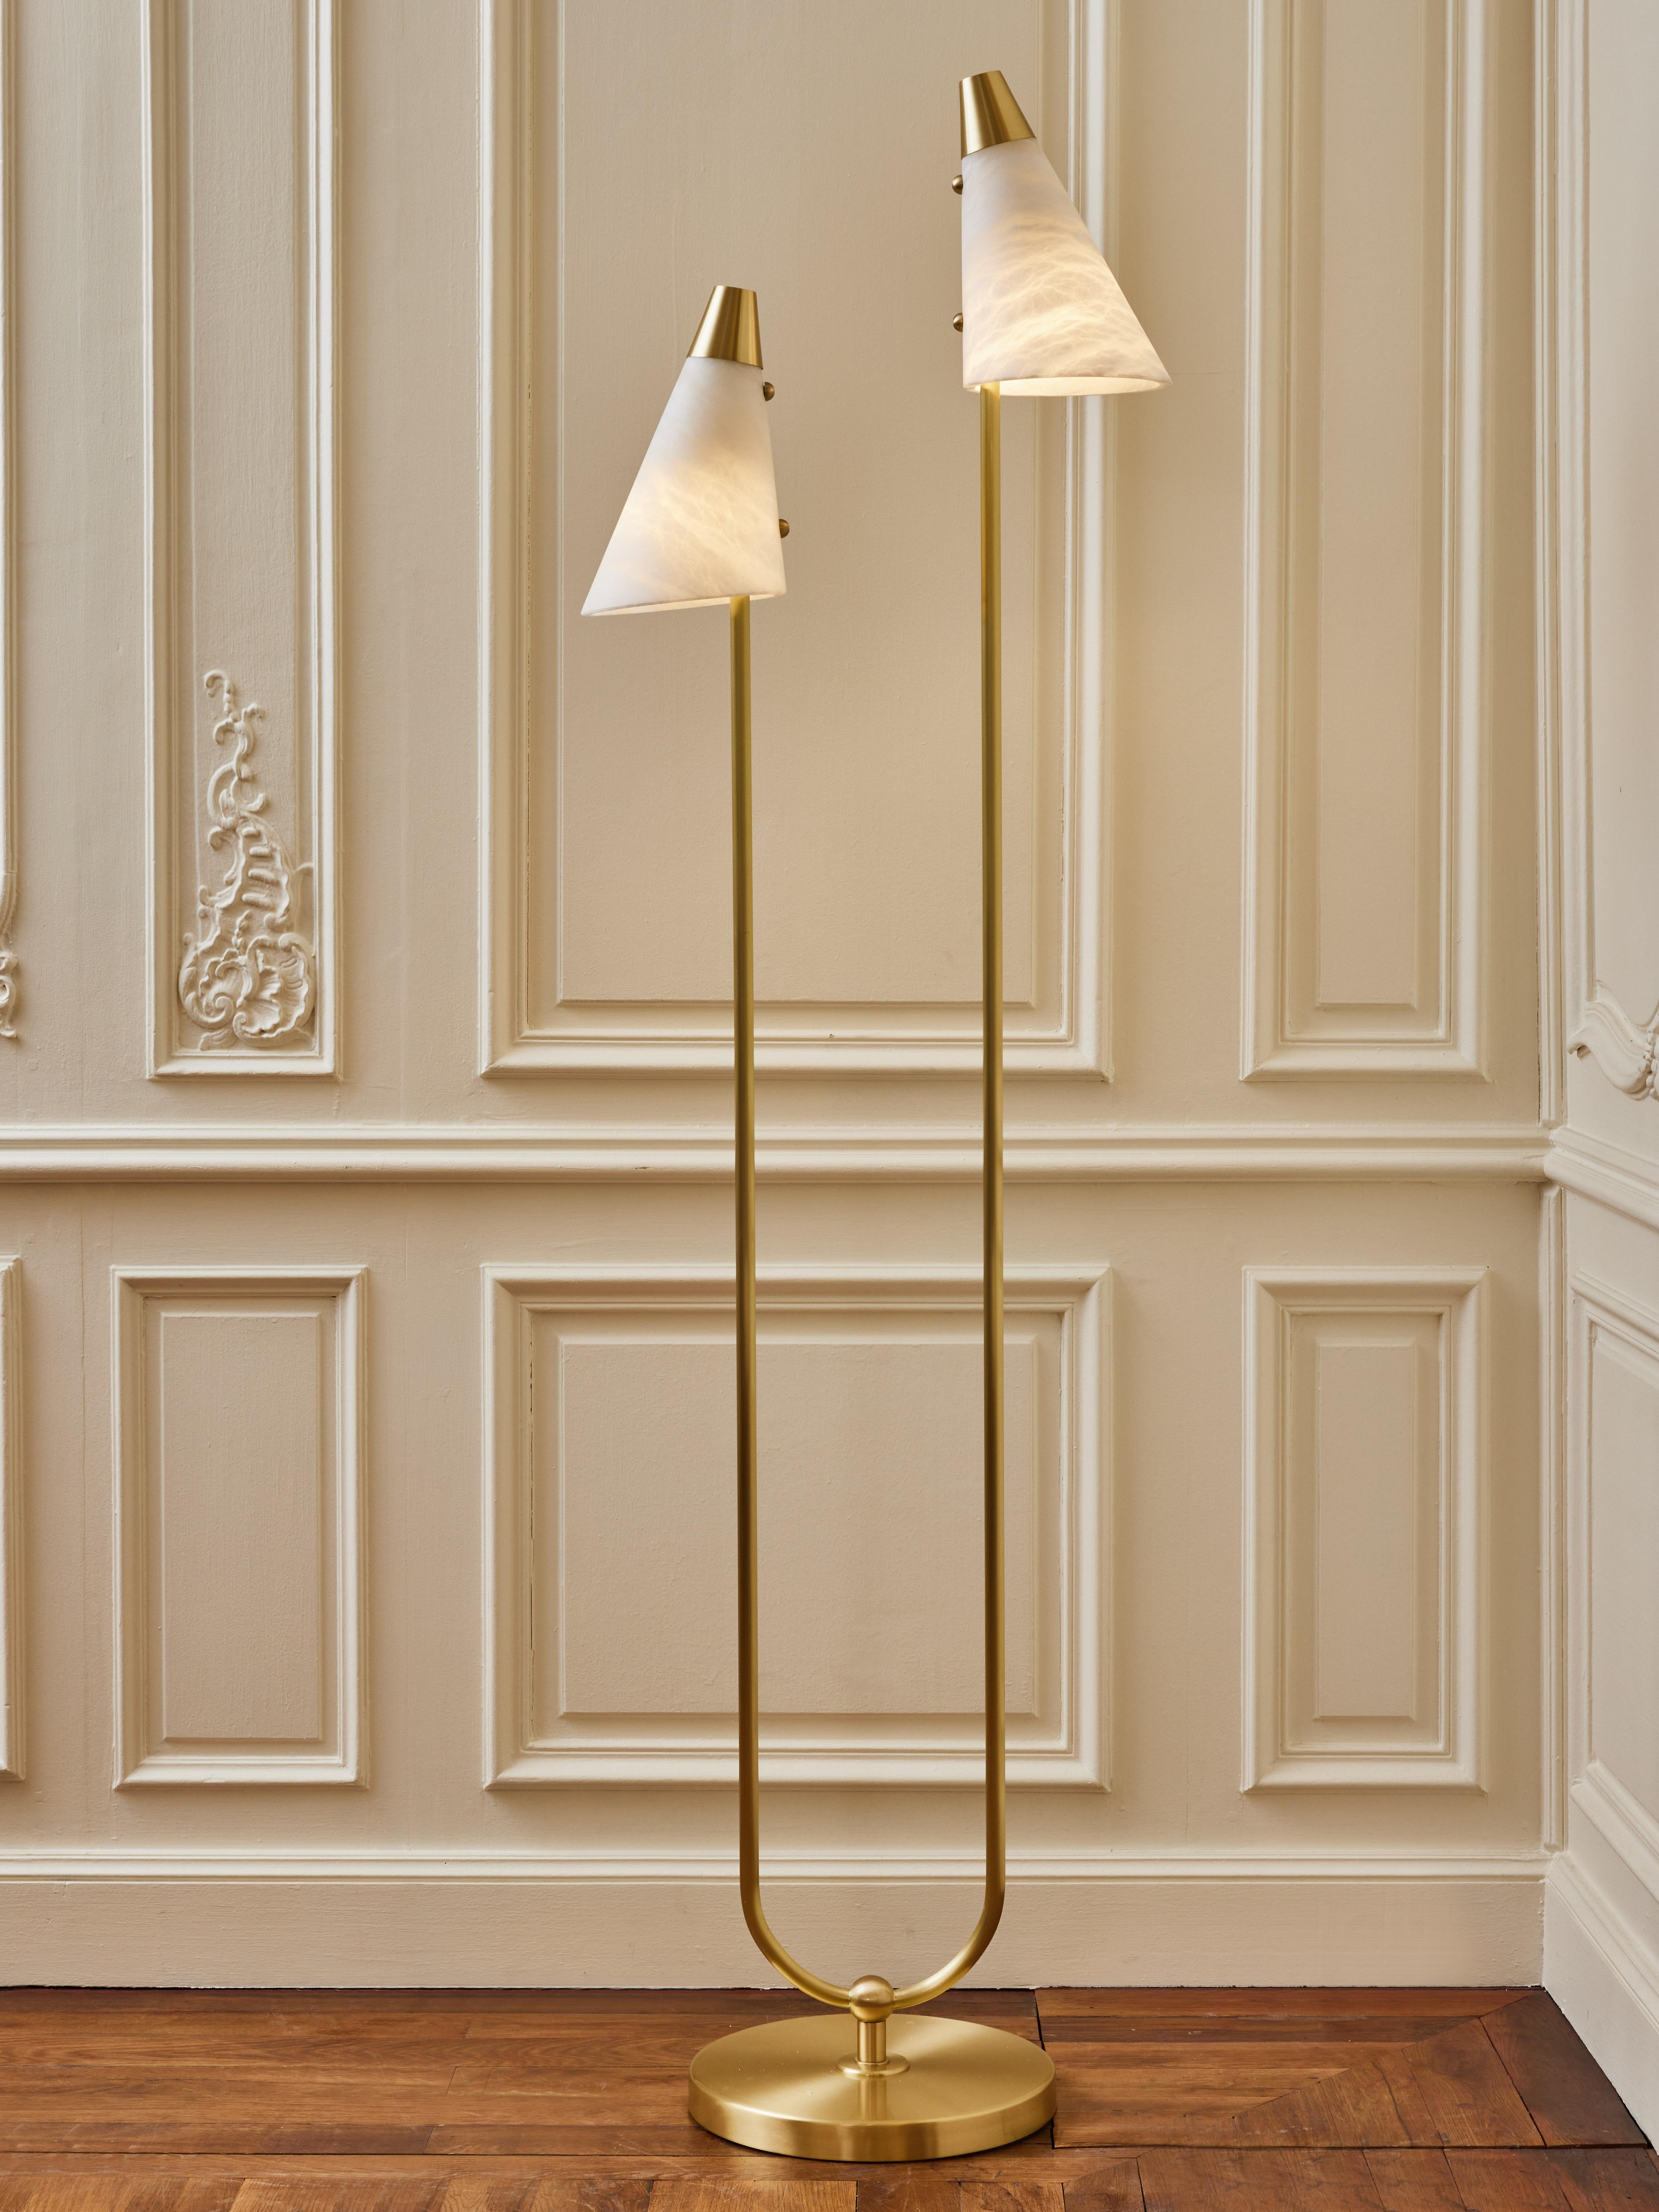 Floor lamp in brushed brass with 2 alabaster scones.
Creation by Studio Glustin.